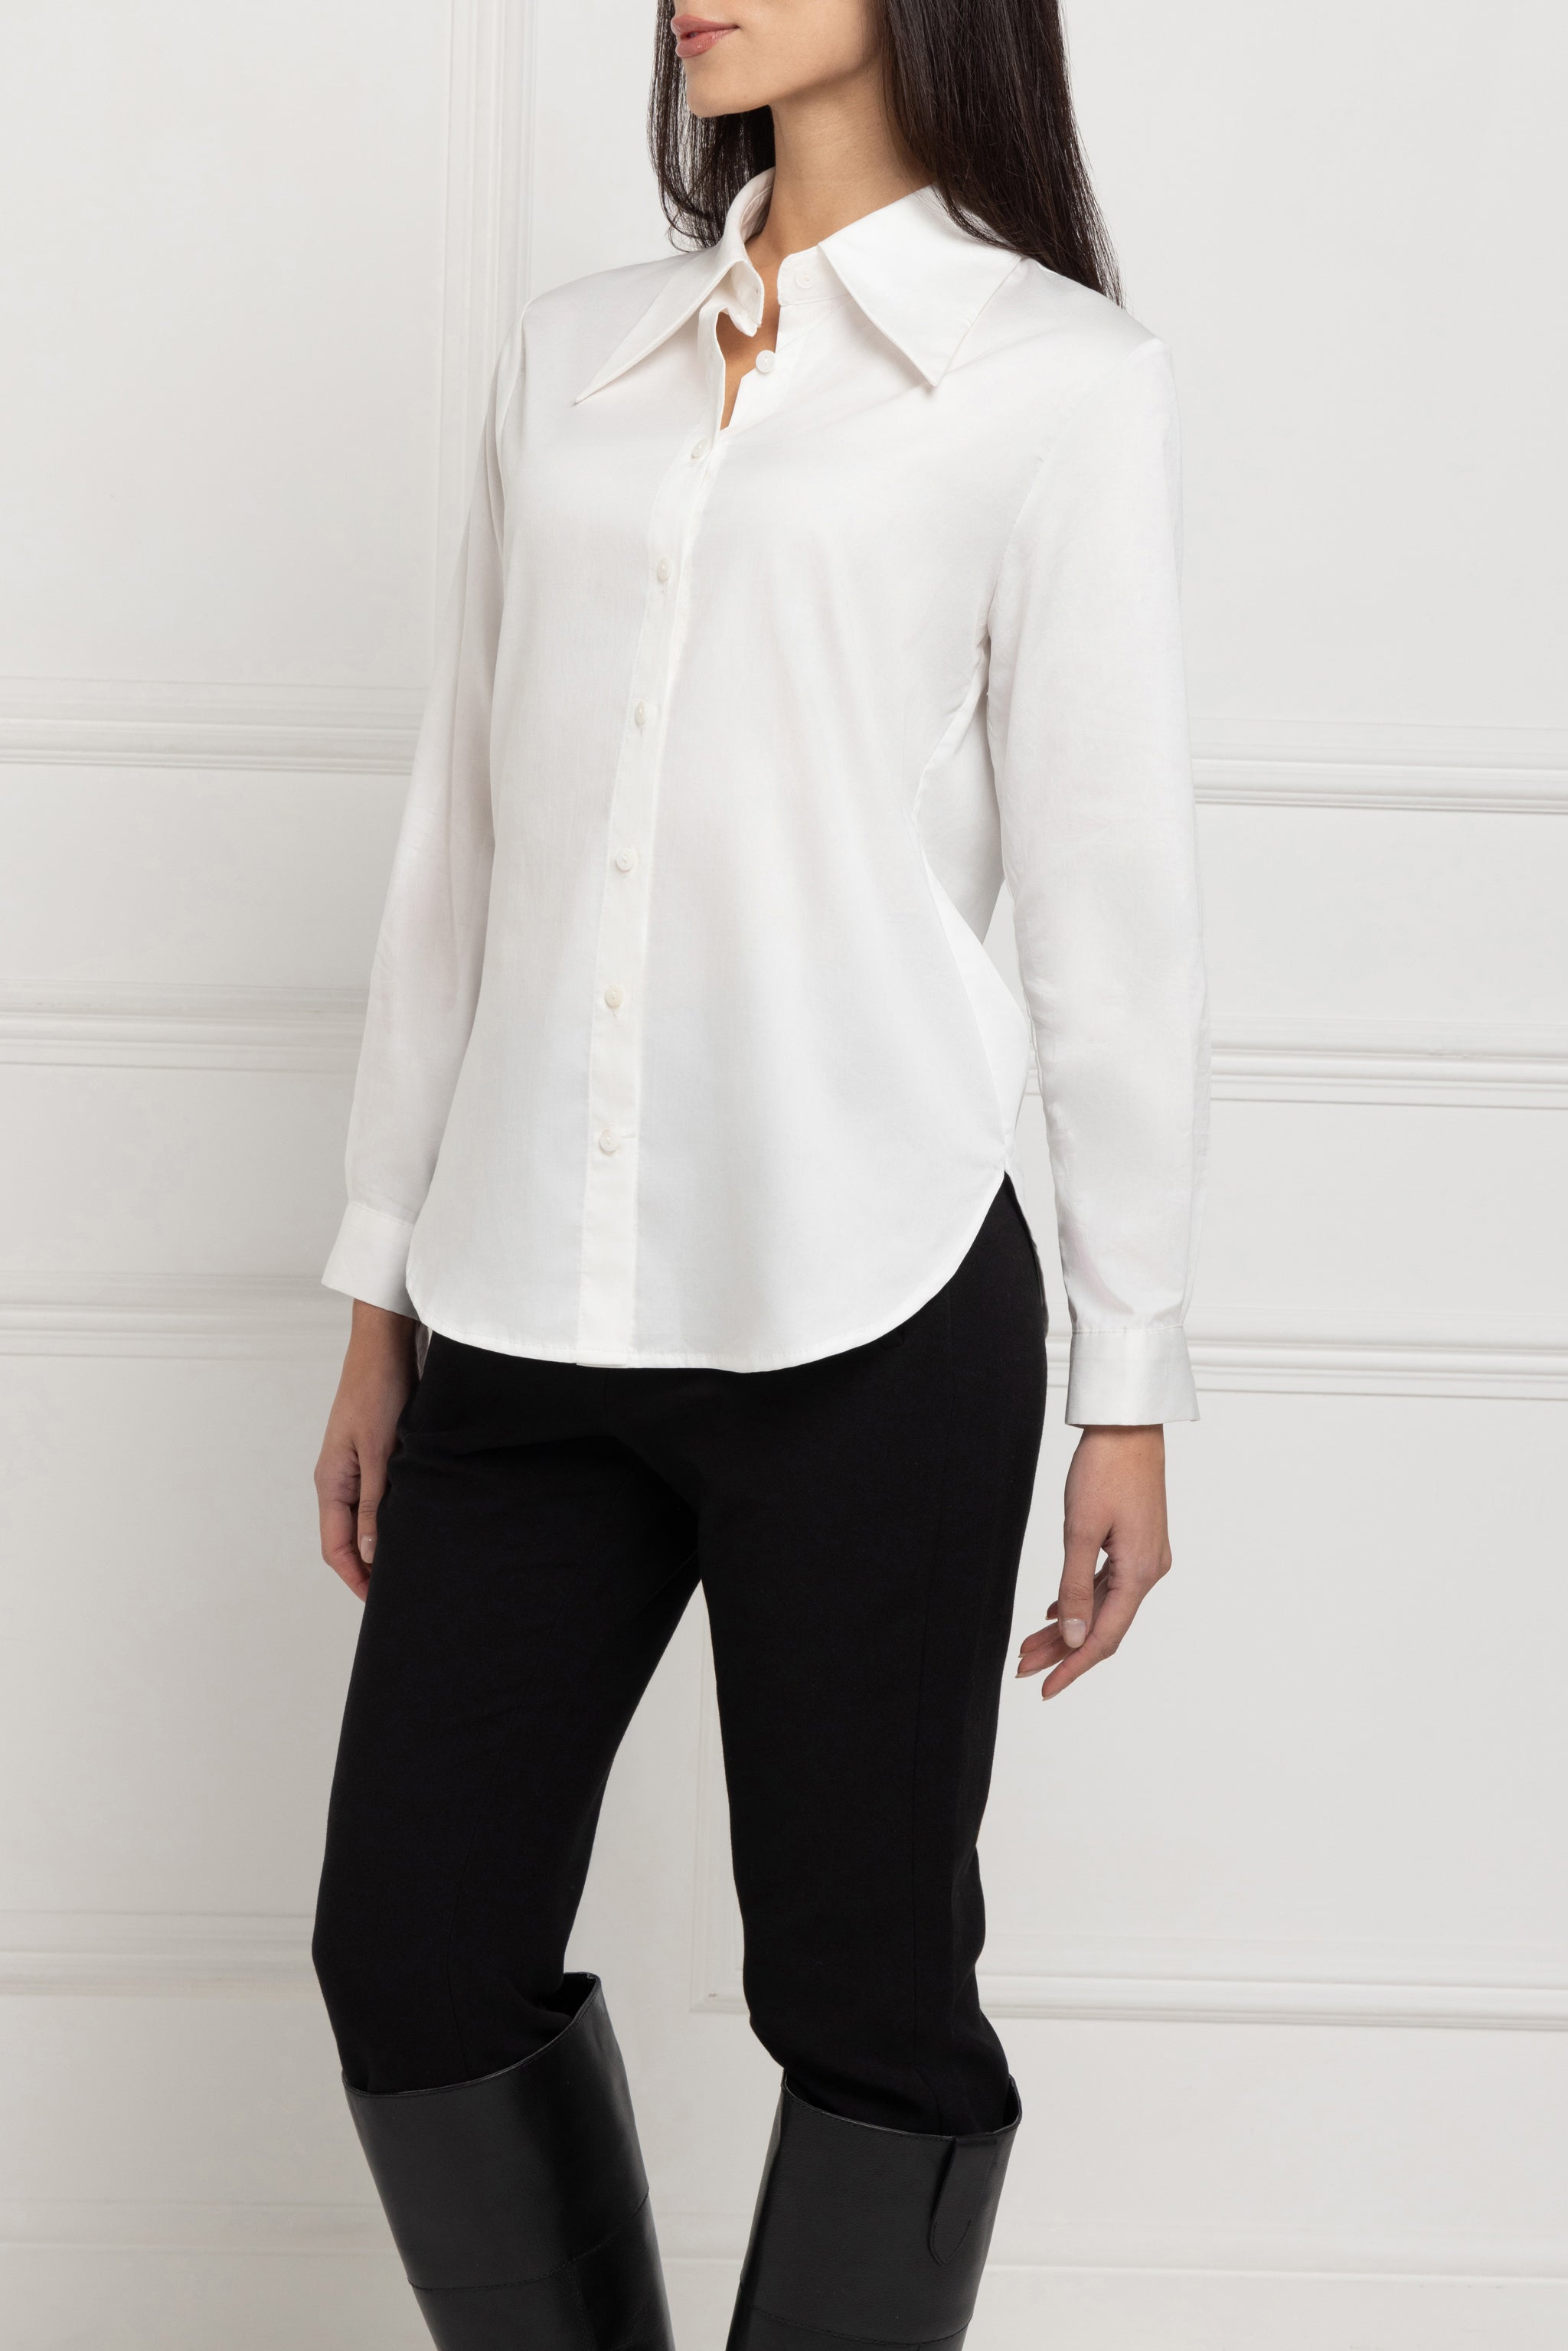 Multi-Way Shirt (White)